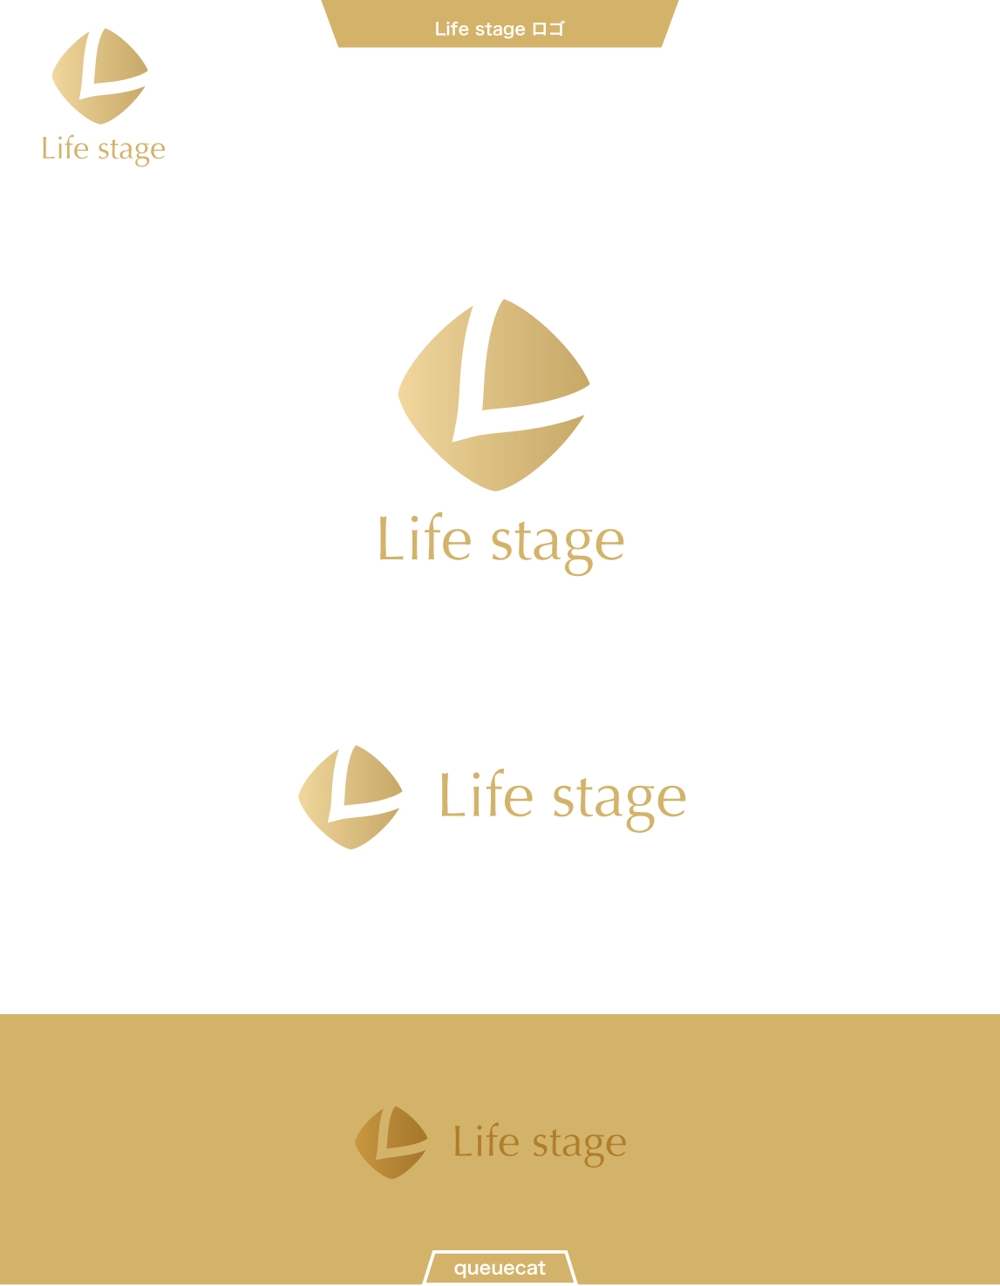 Life stage1_1.jpg